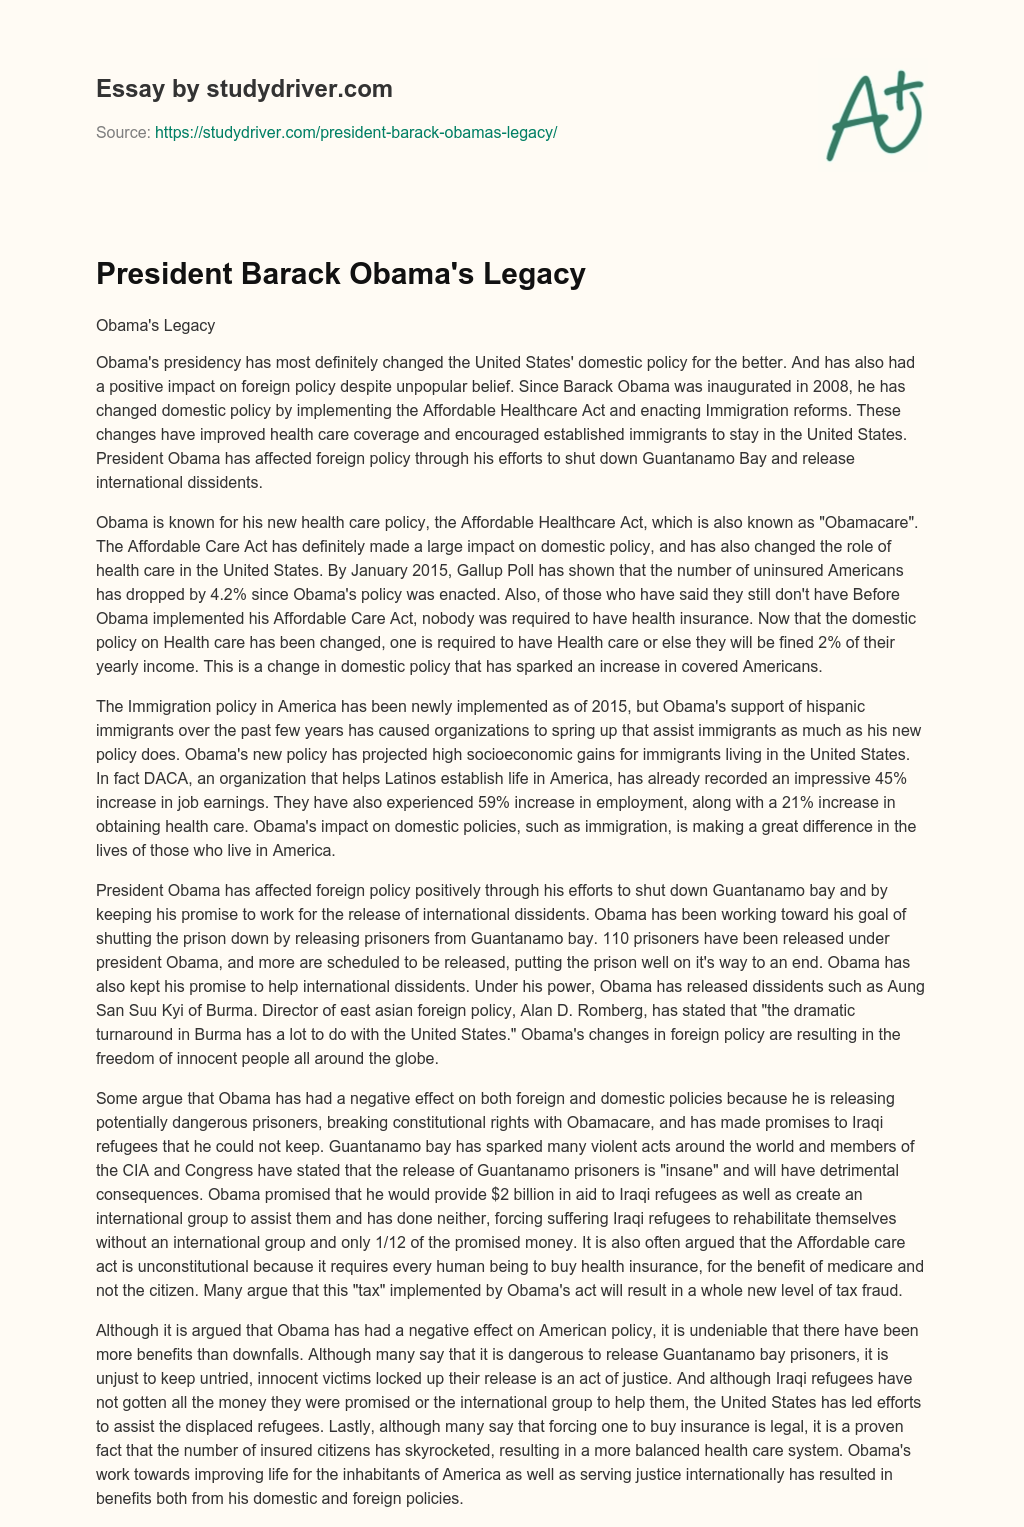 President Barack Obama’s Legacy essay